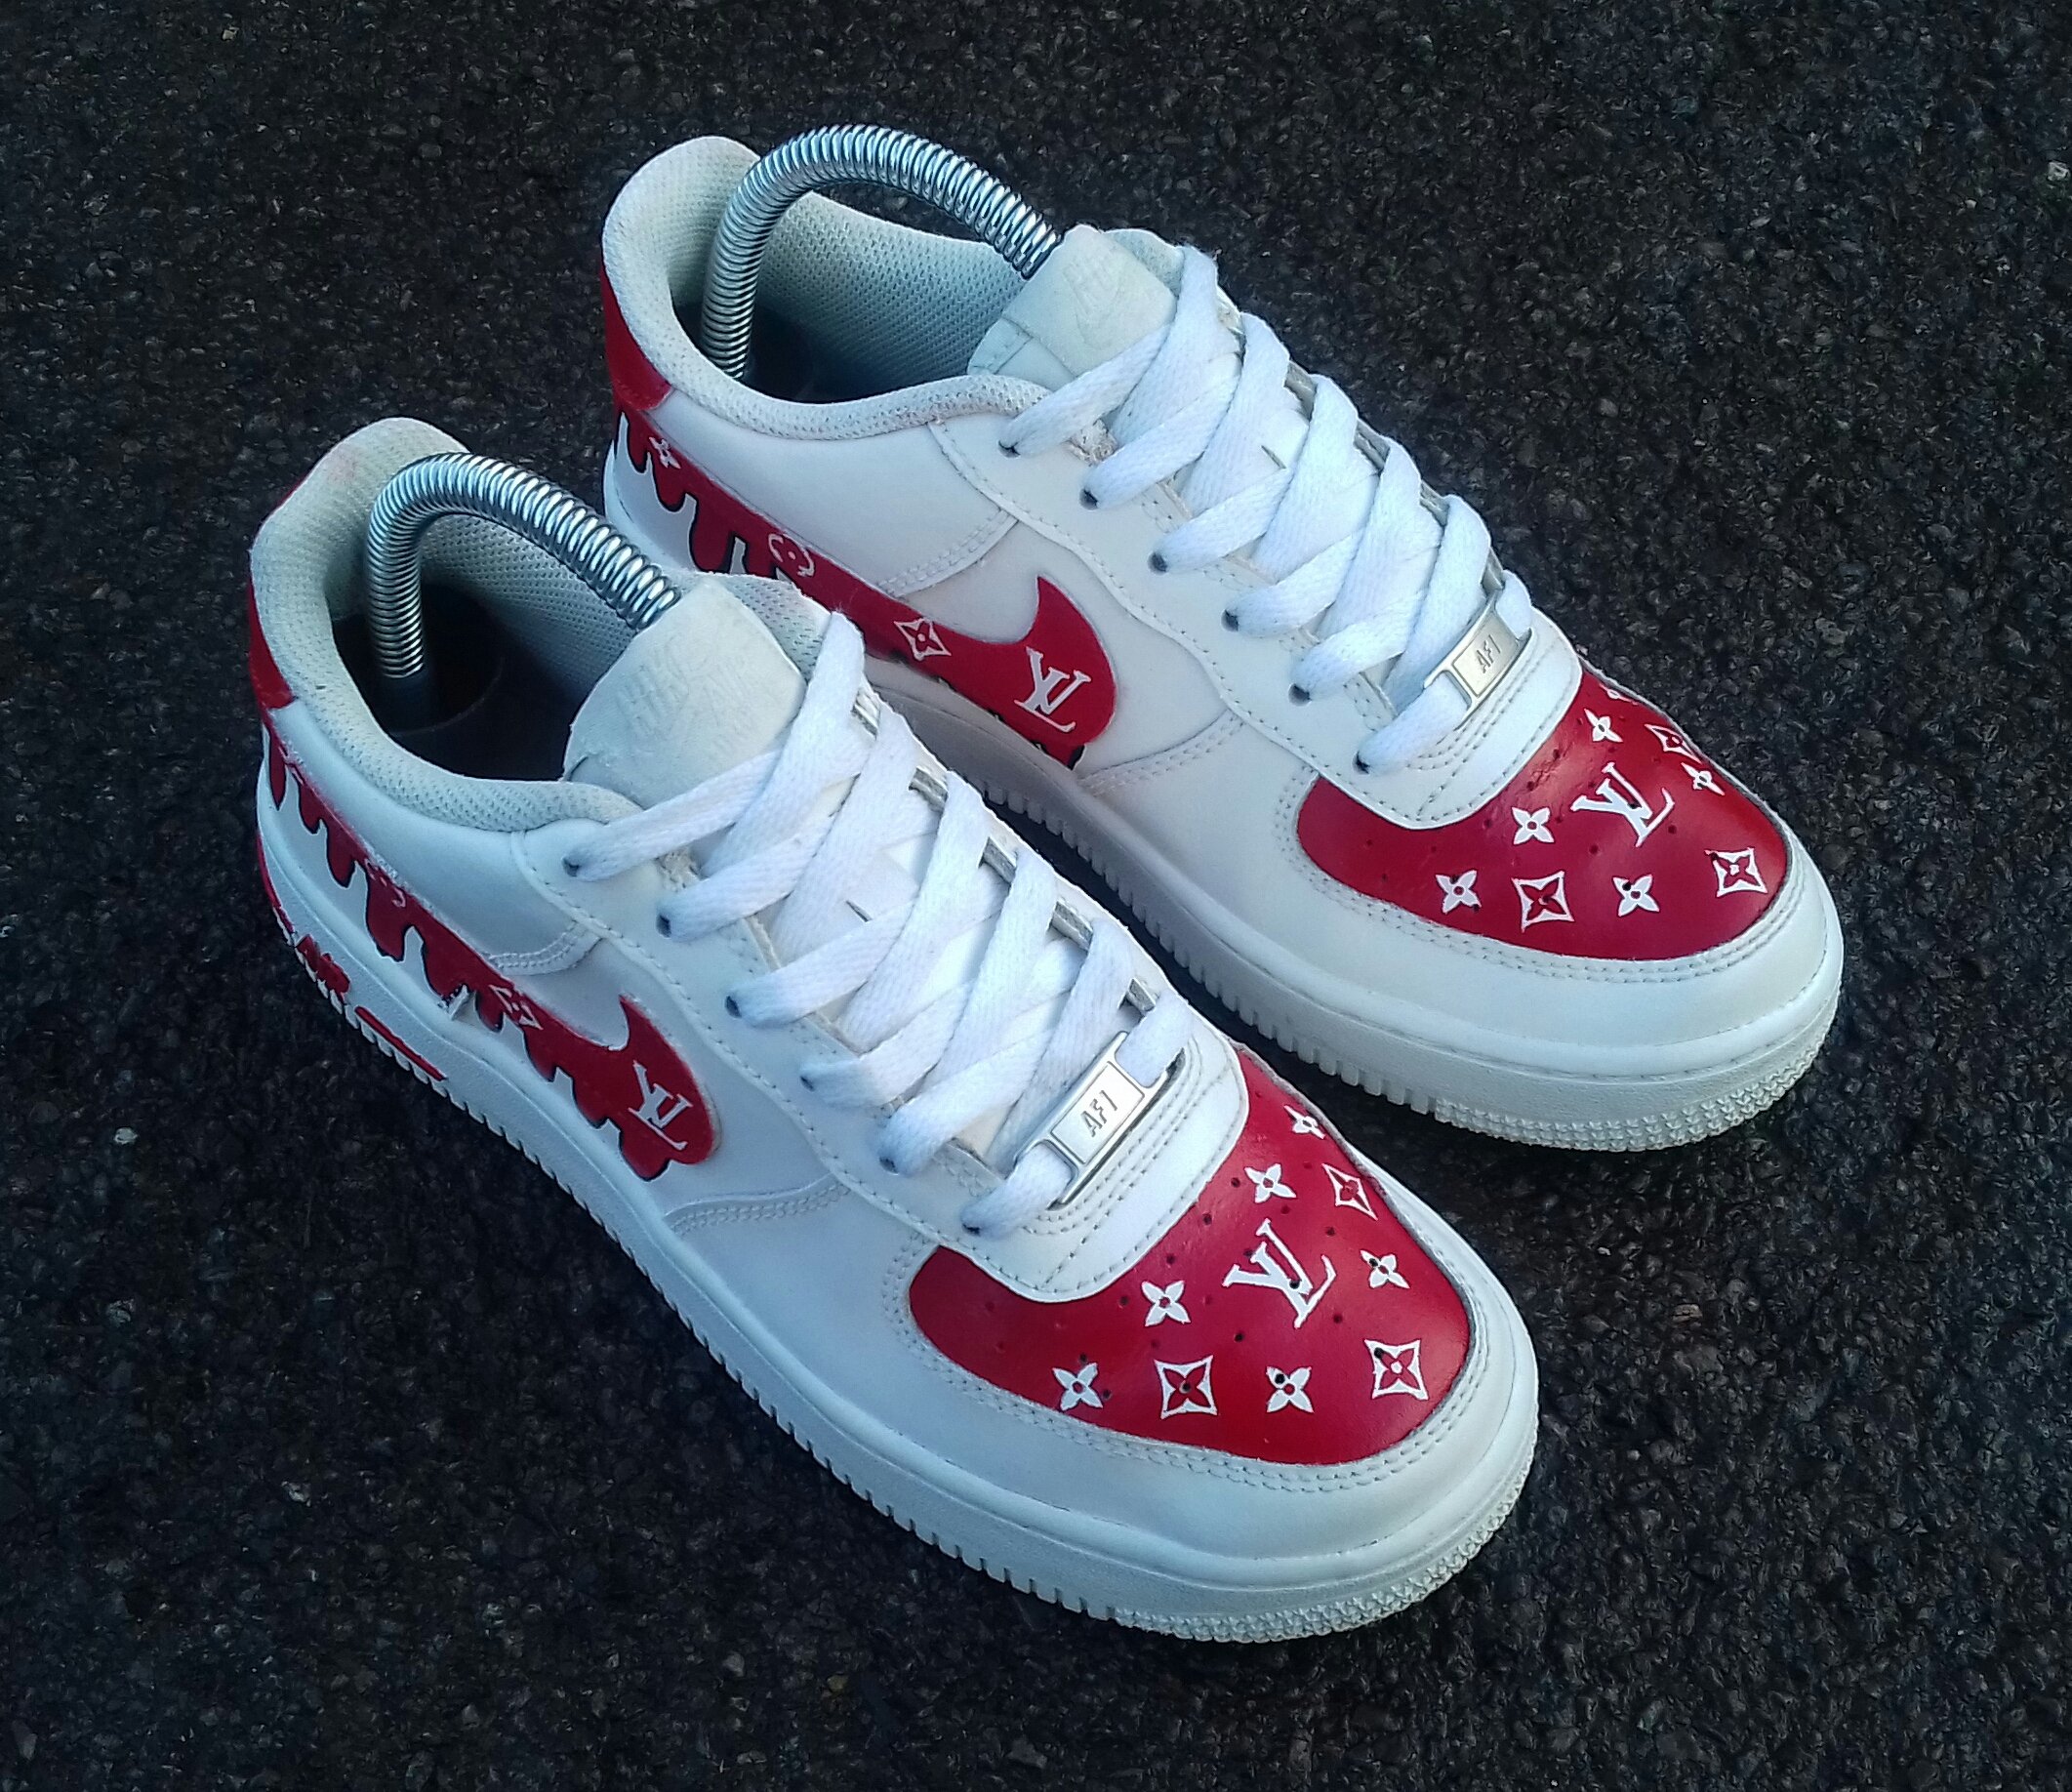 Eylise Customz on X: White air force 1 with red Lv drip #customshoes  #customtrainers #customsneakers #airforce1 #nikecustom #hypebeastkicks  #kicks #sneakers #louisVuitton #drip #custom #restored   / X